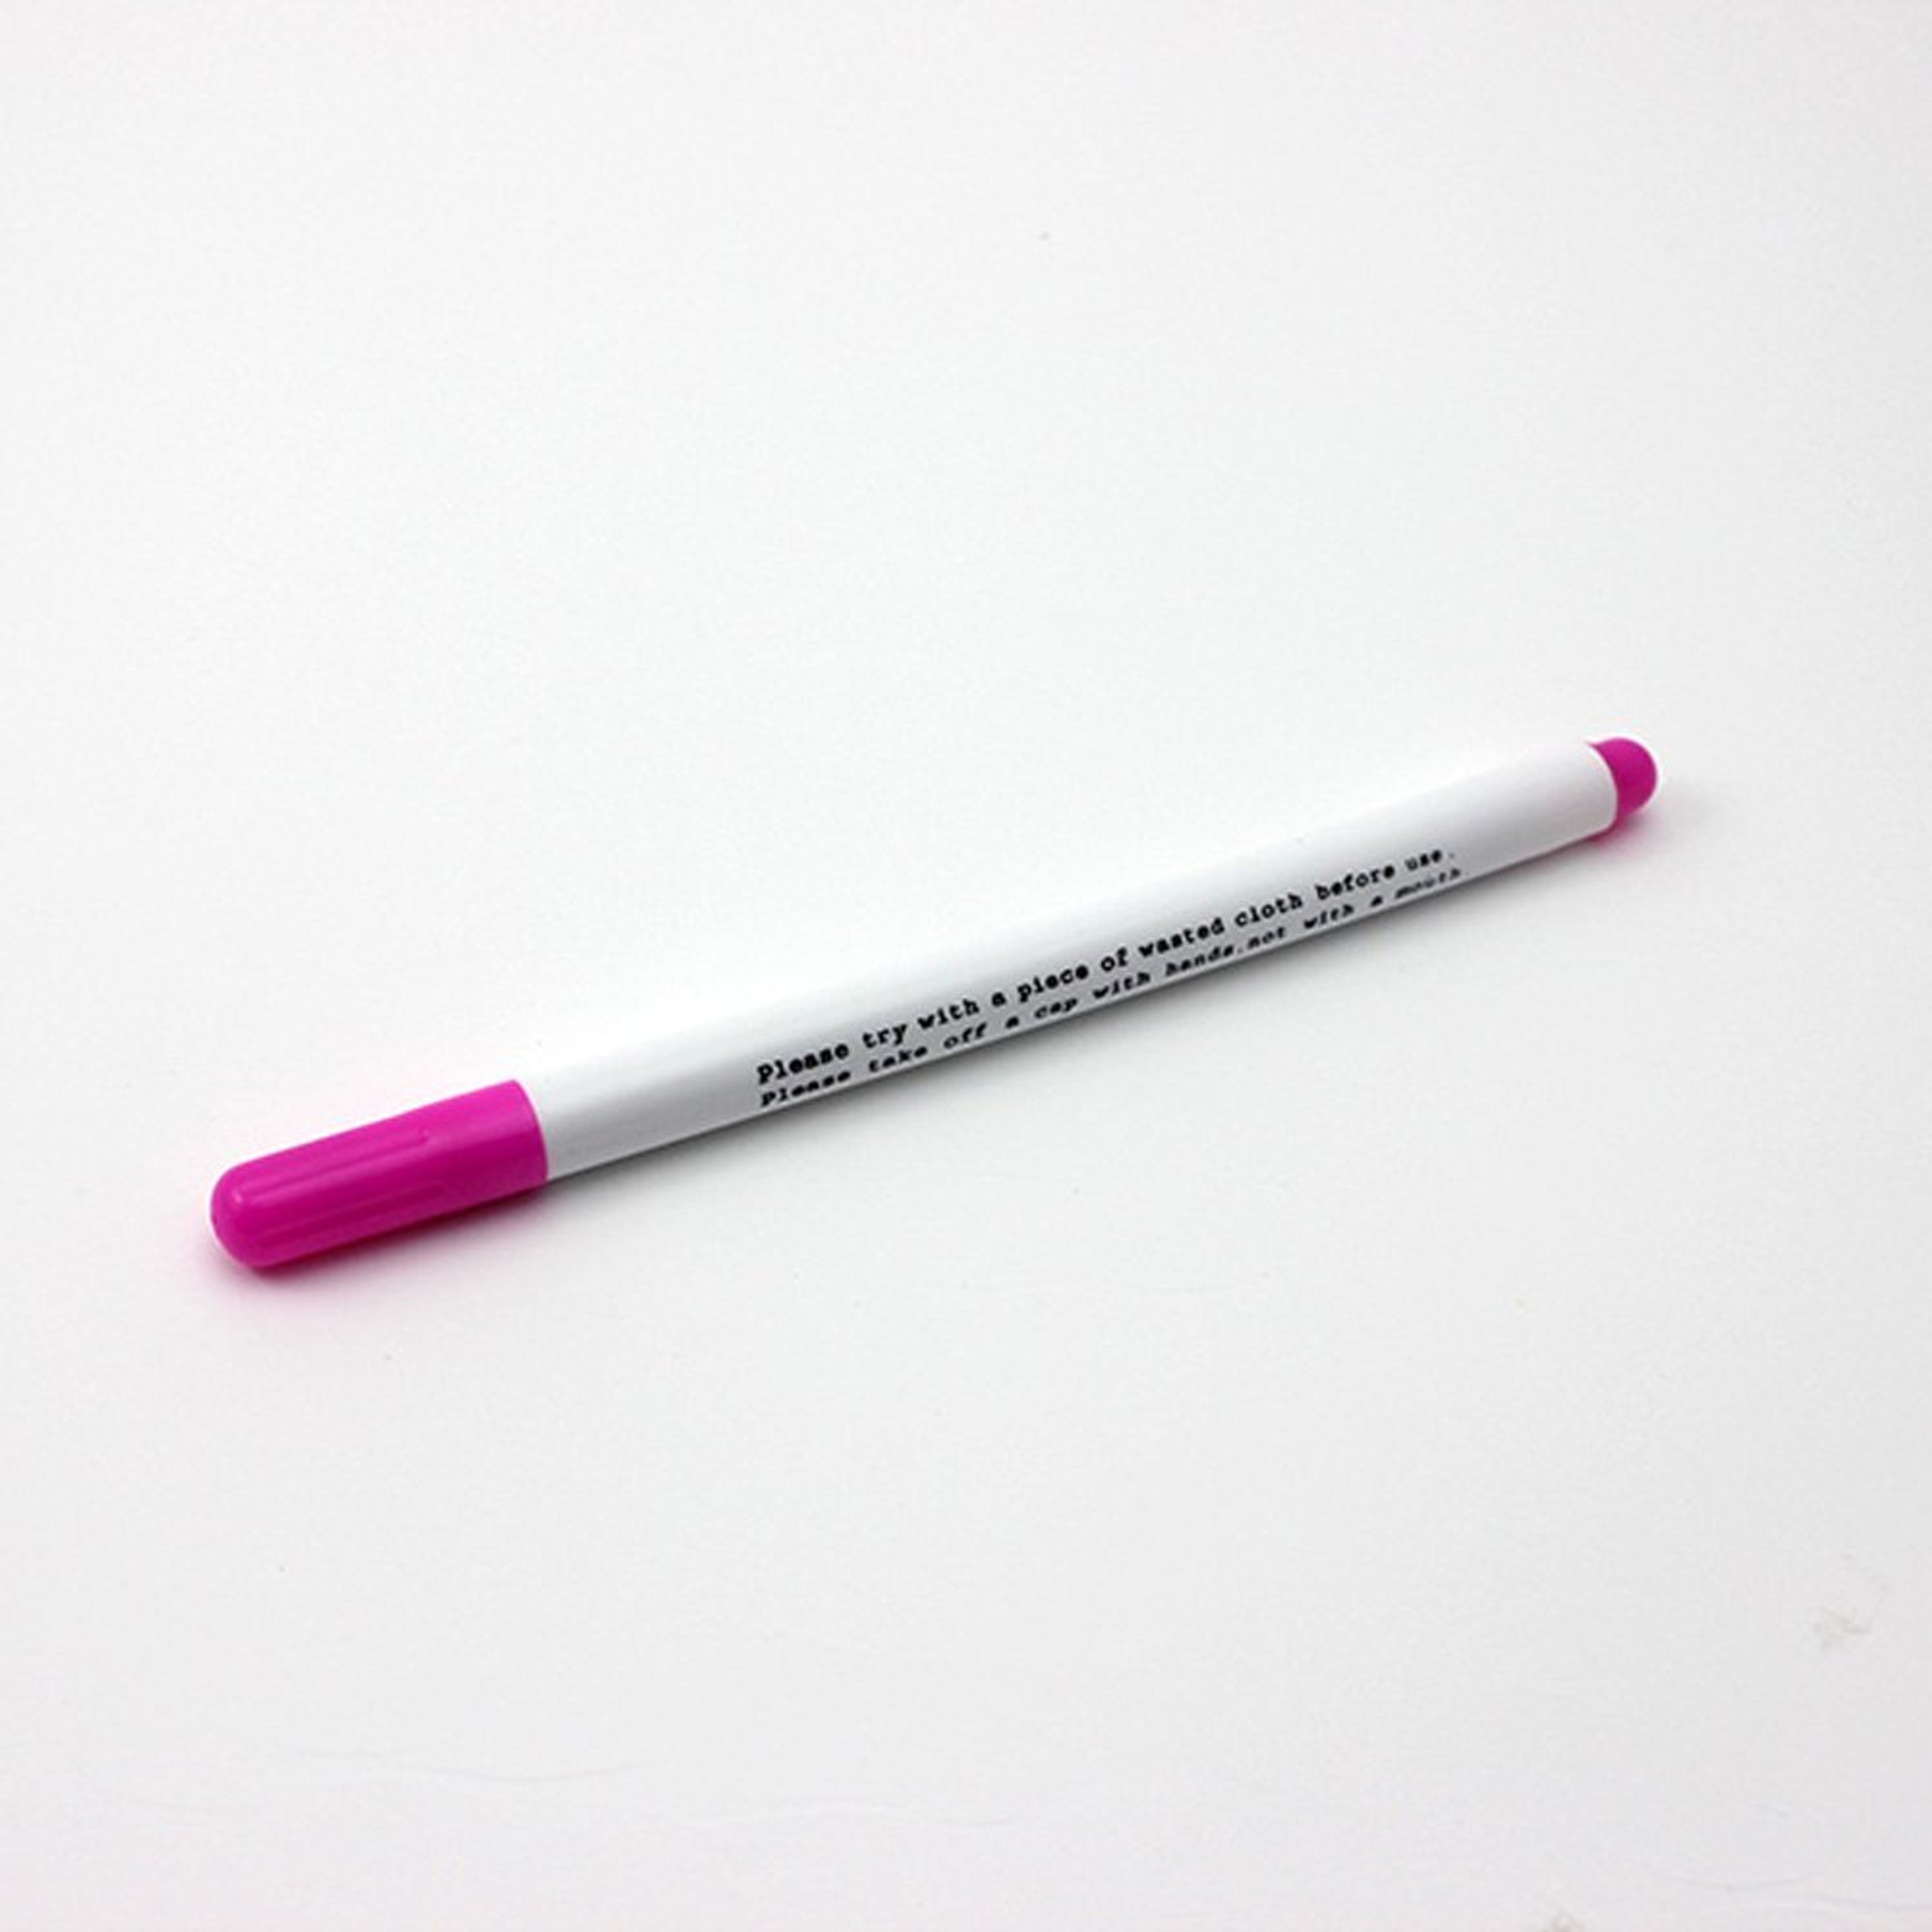 Water Soluble Marker for needlework Needlework Pink - Veralis